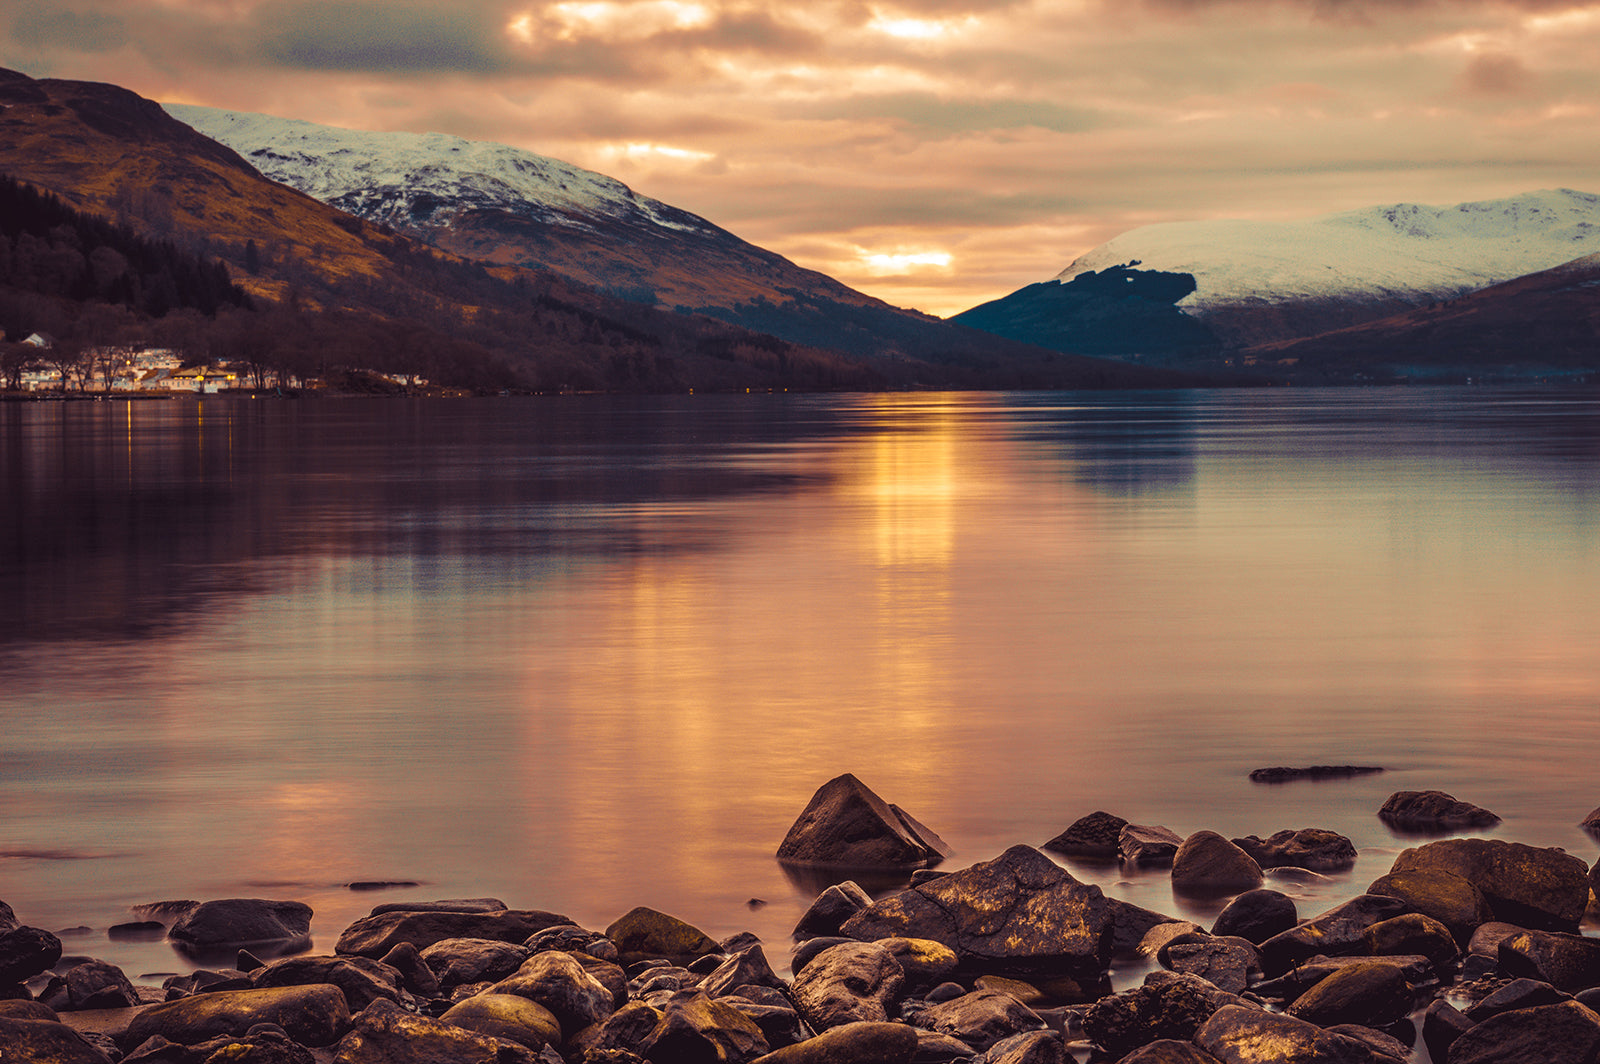 Loch Lomond at sunset